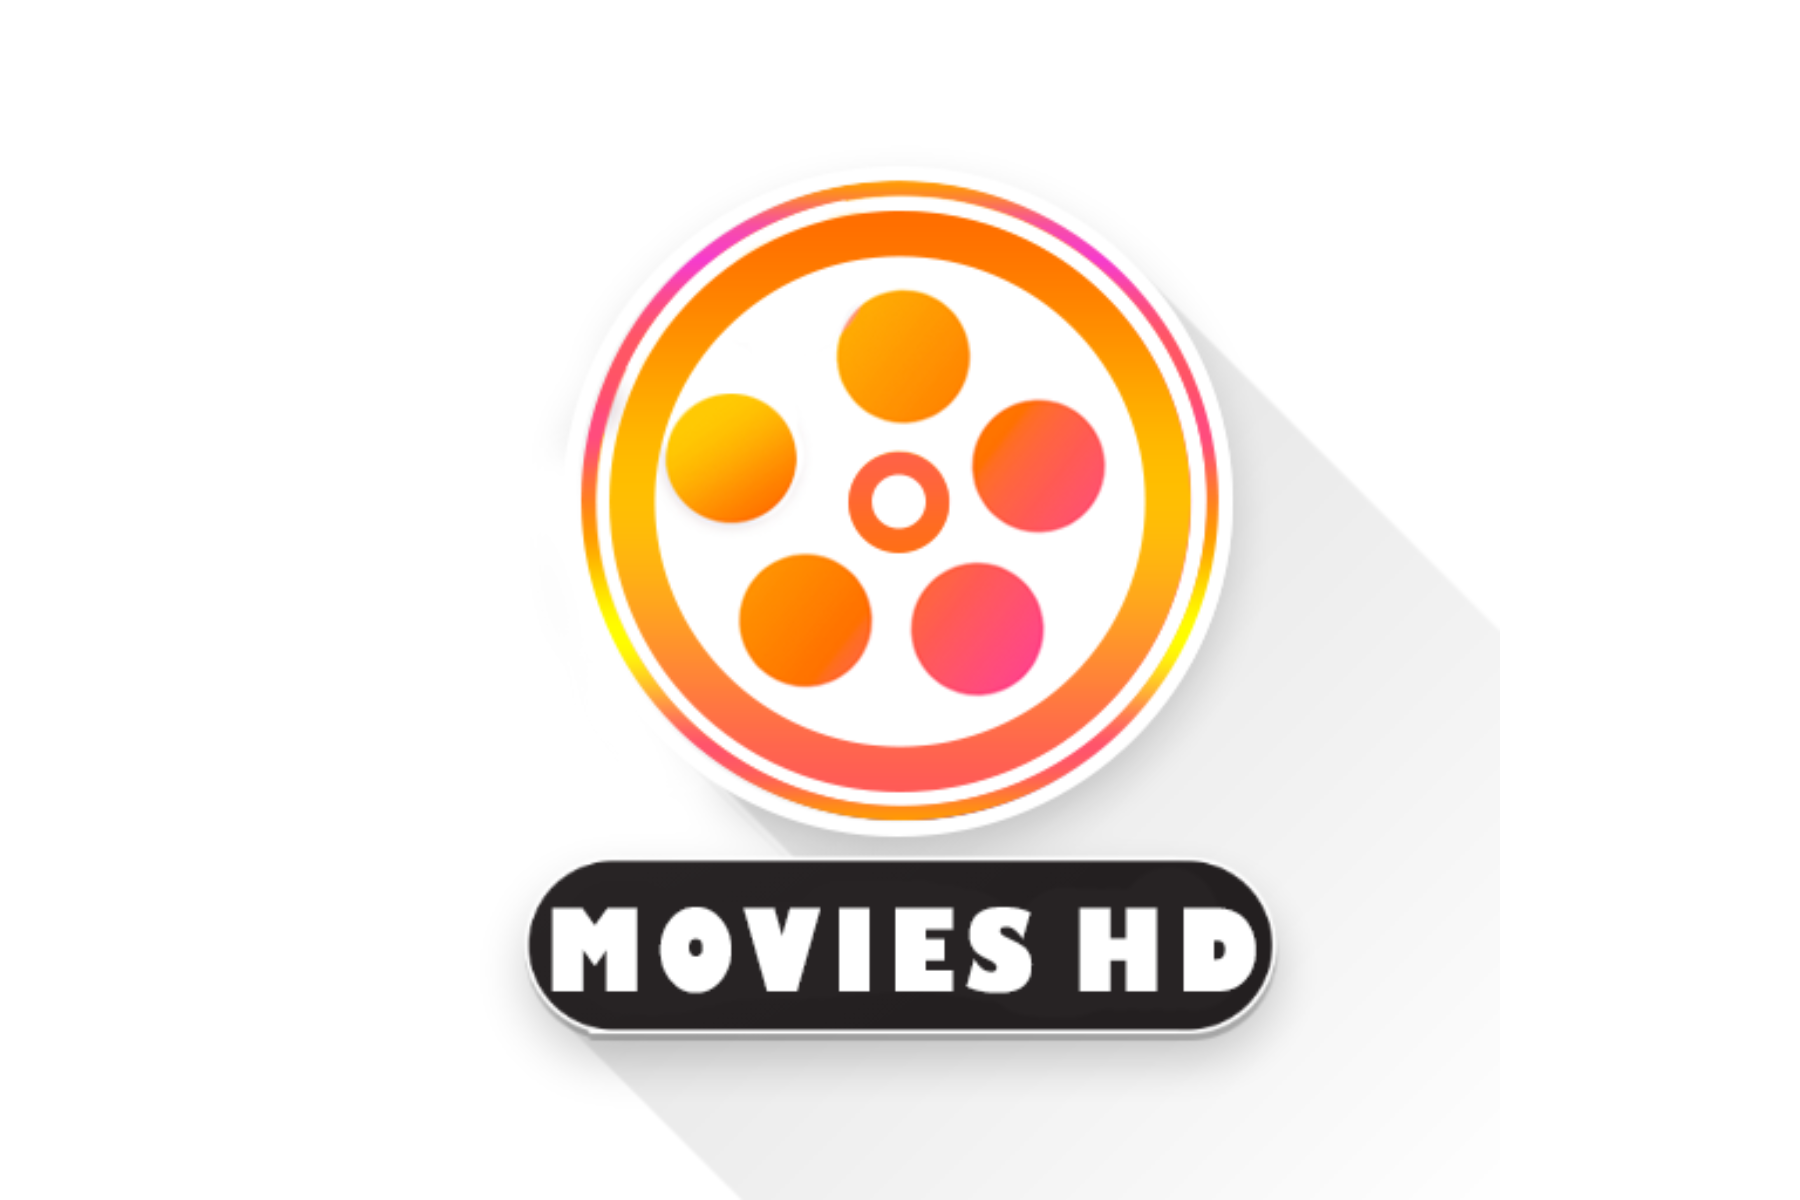 The logo of WatchMoviesHD Site